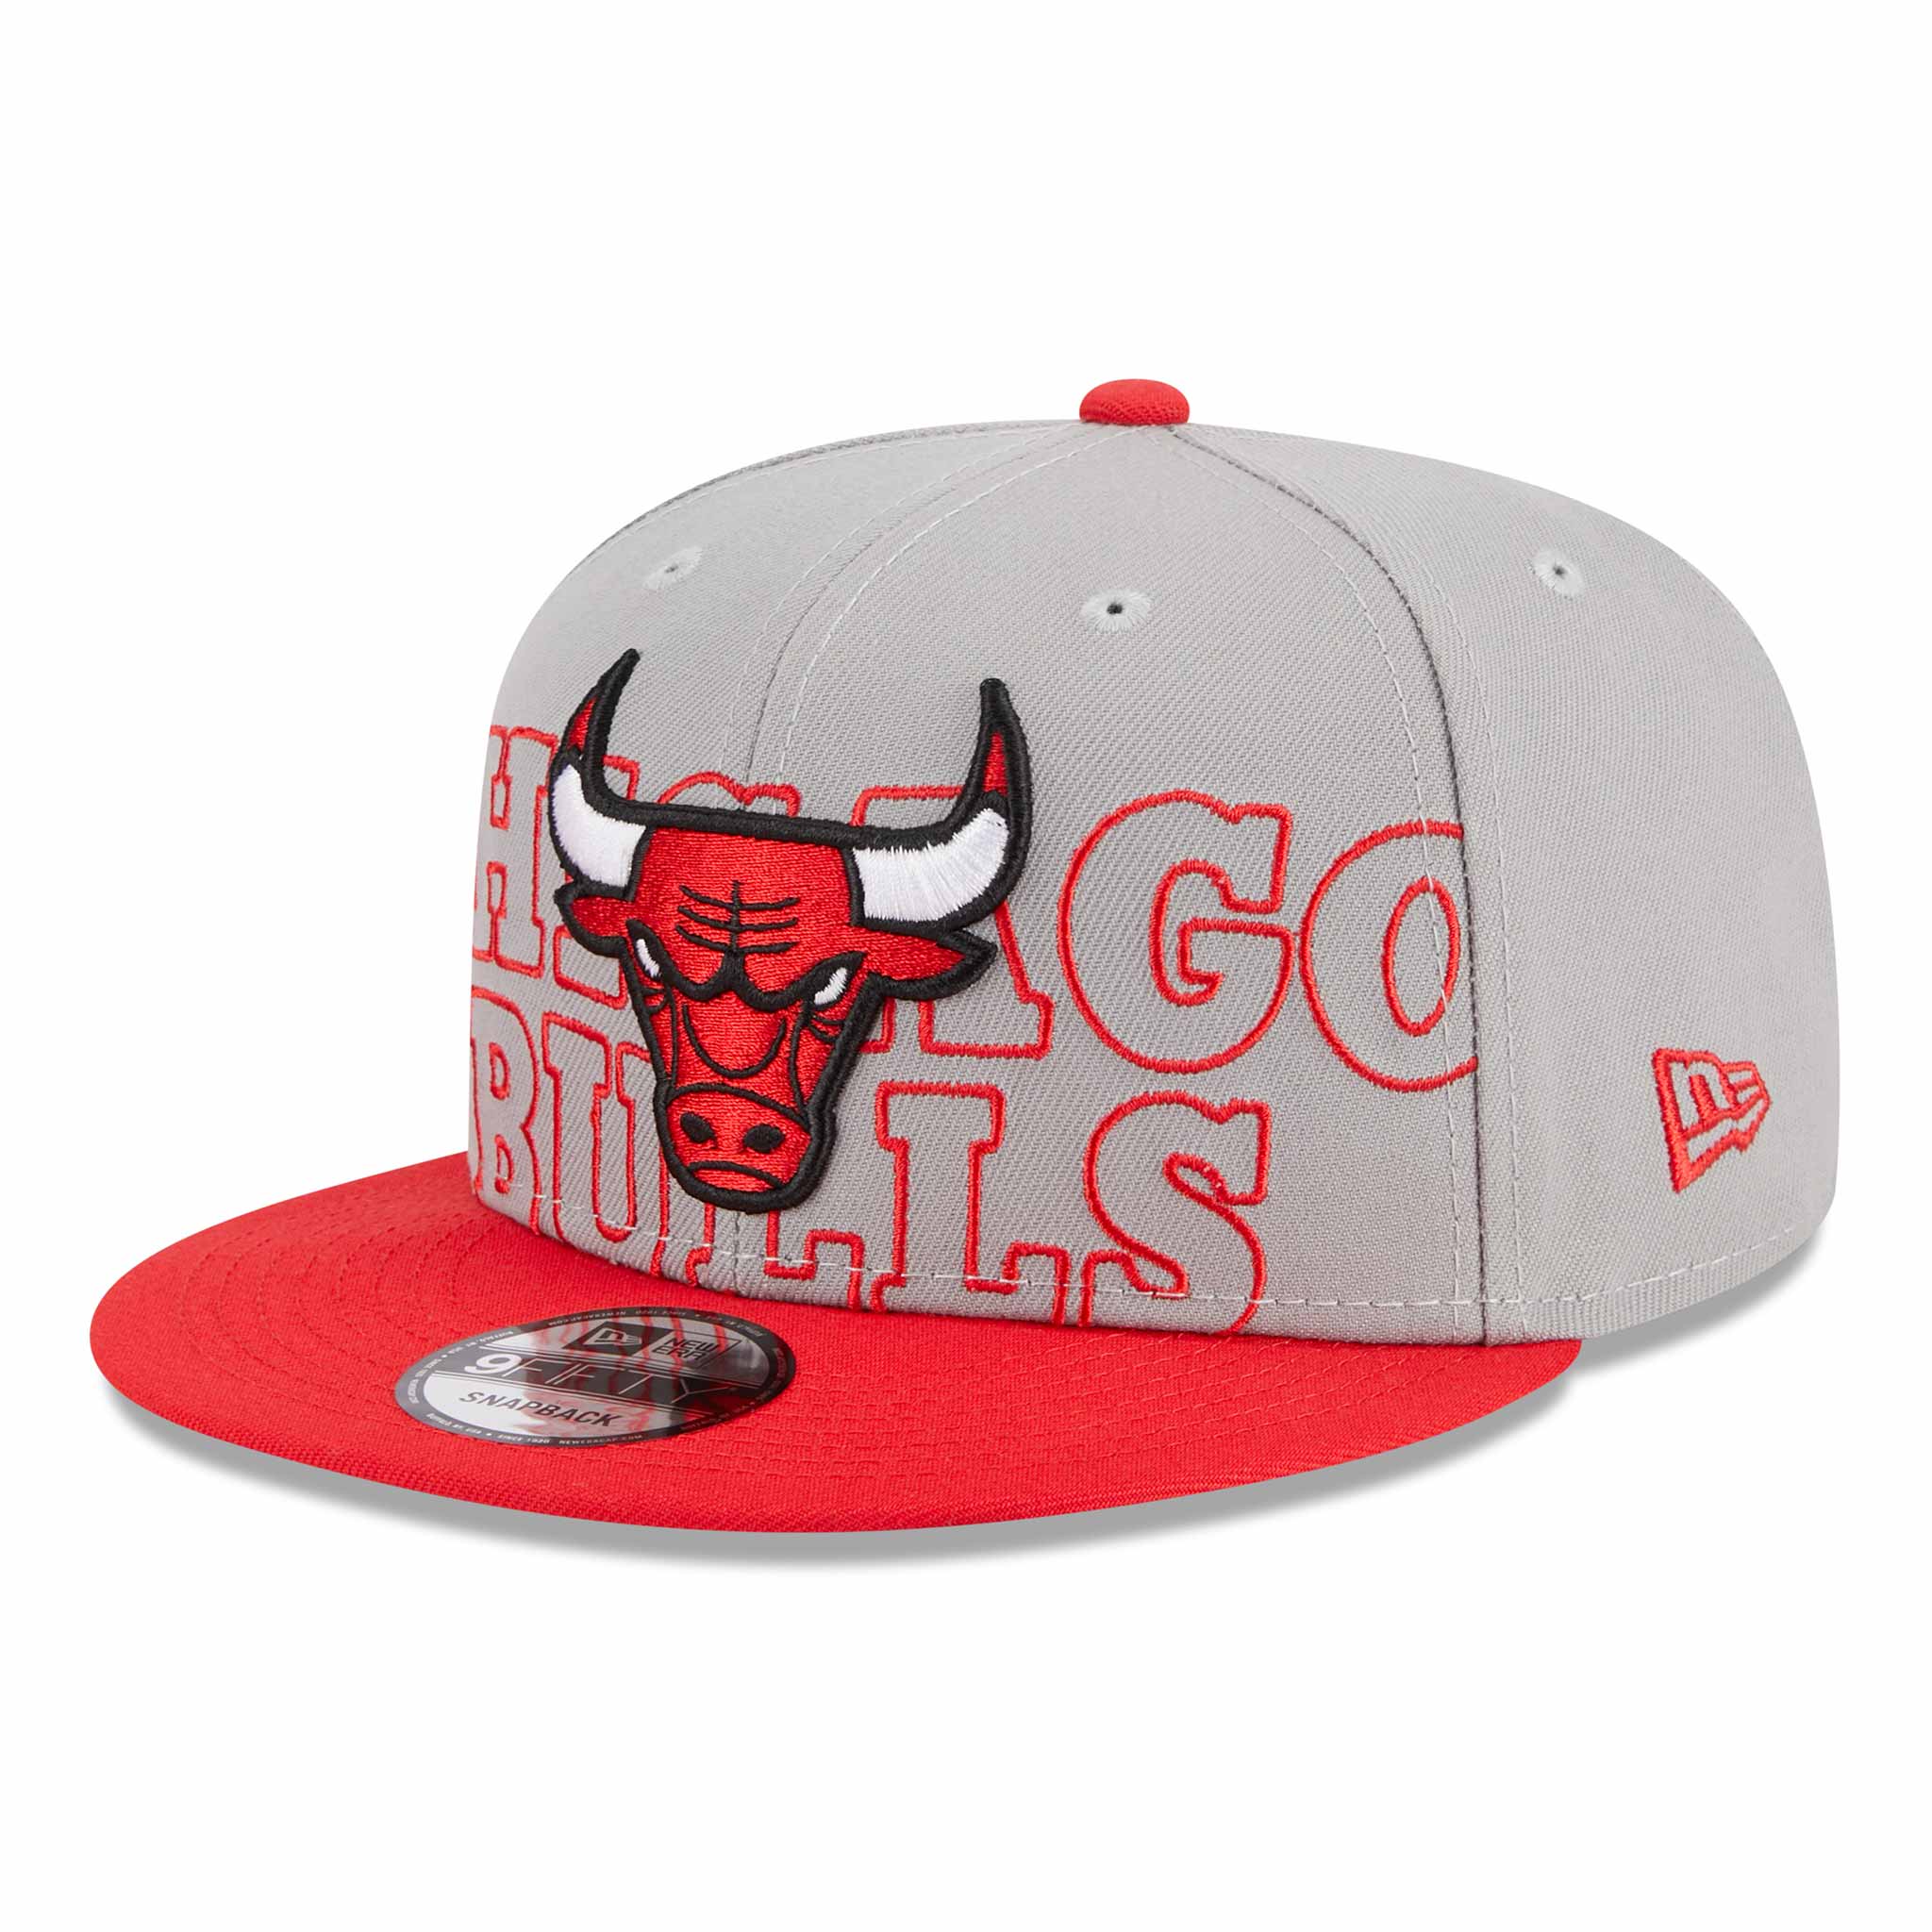 Chicago Bulls Red New Era 9FIFTY Snapback